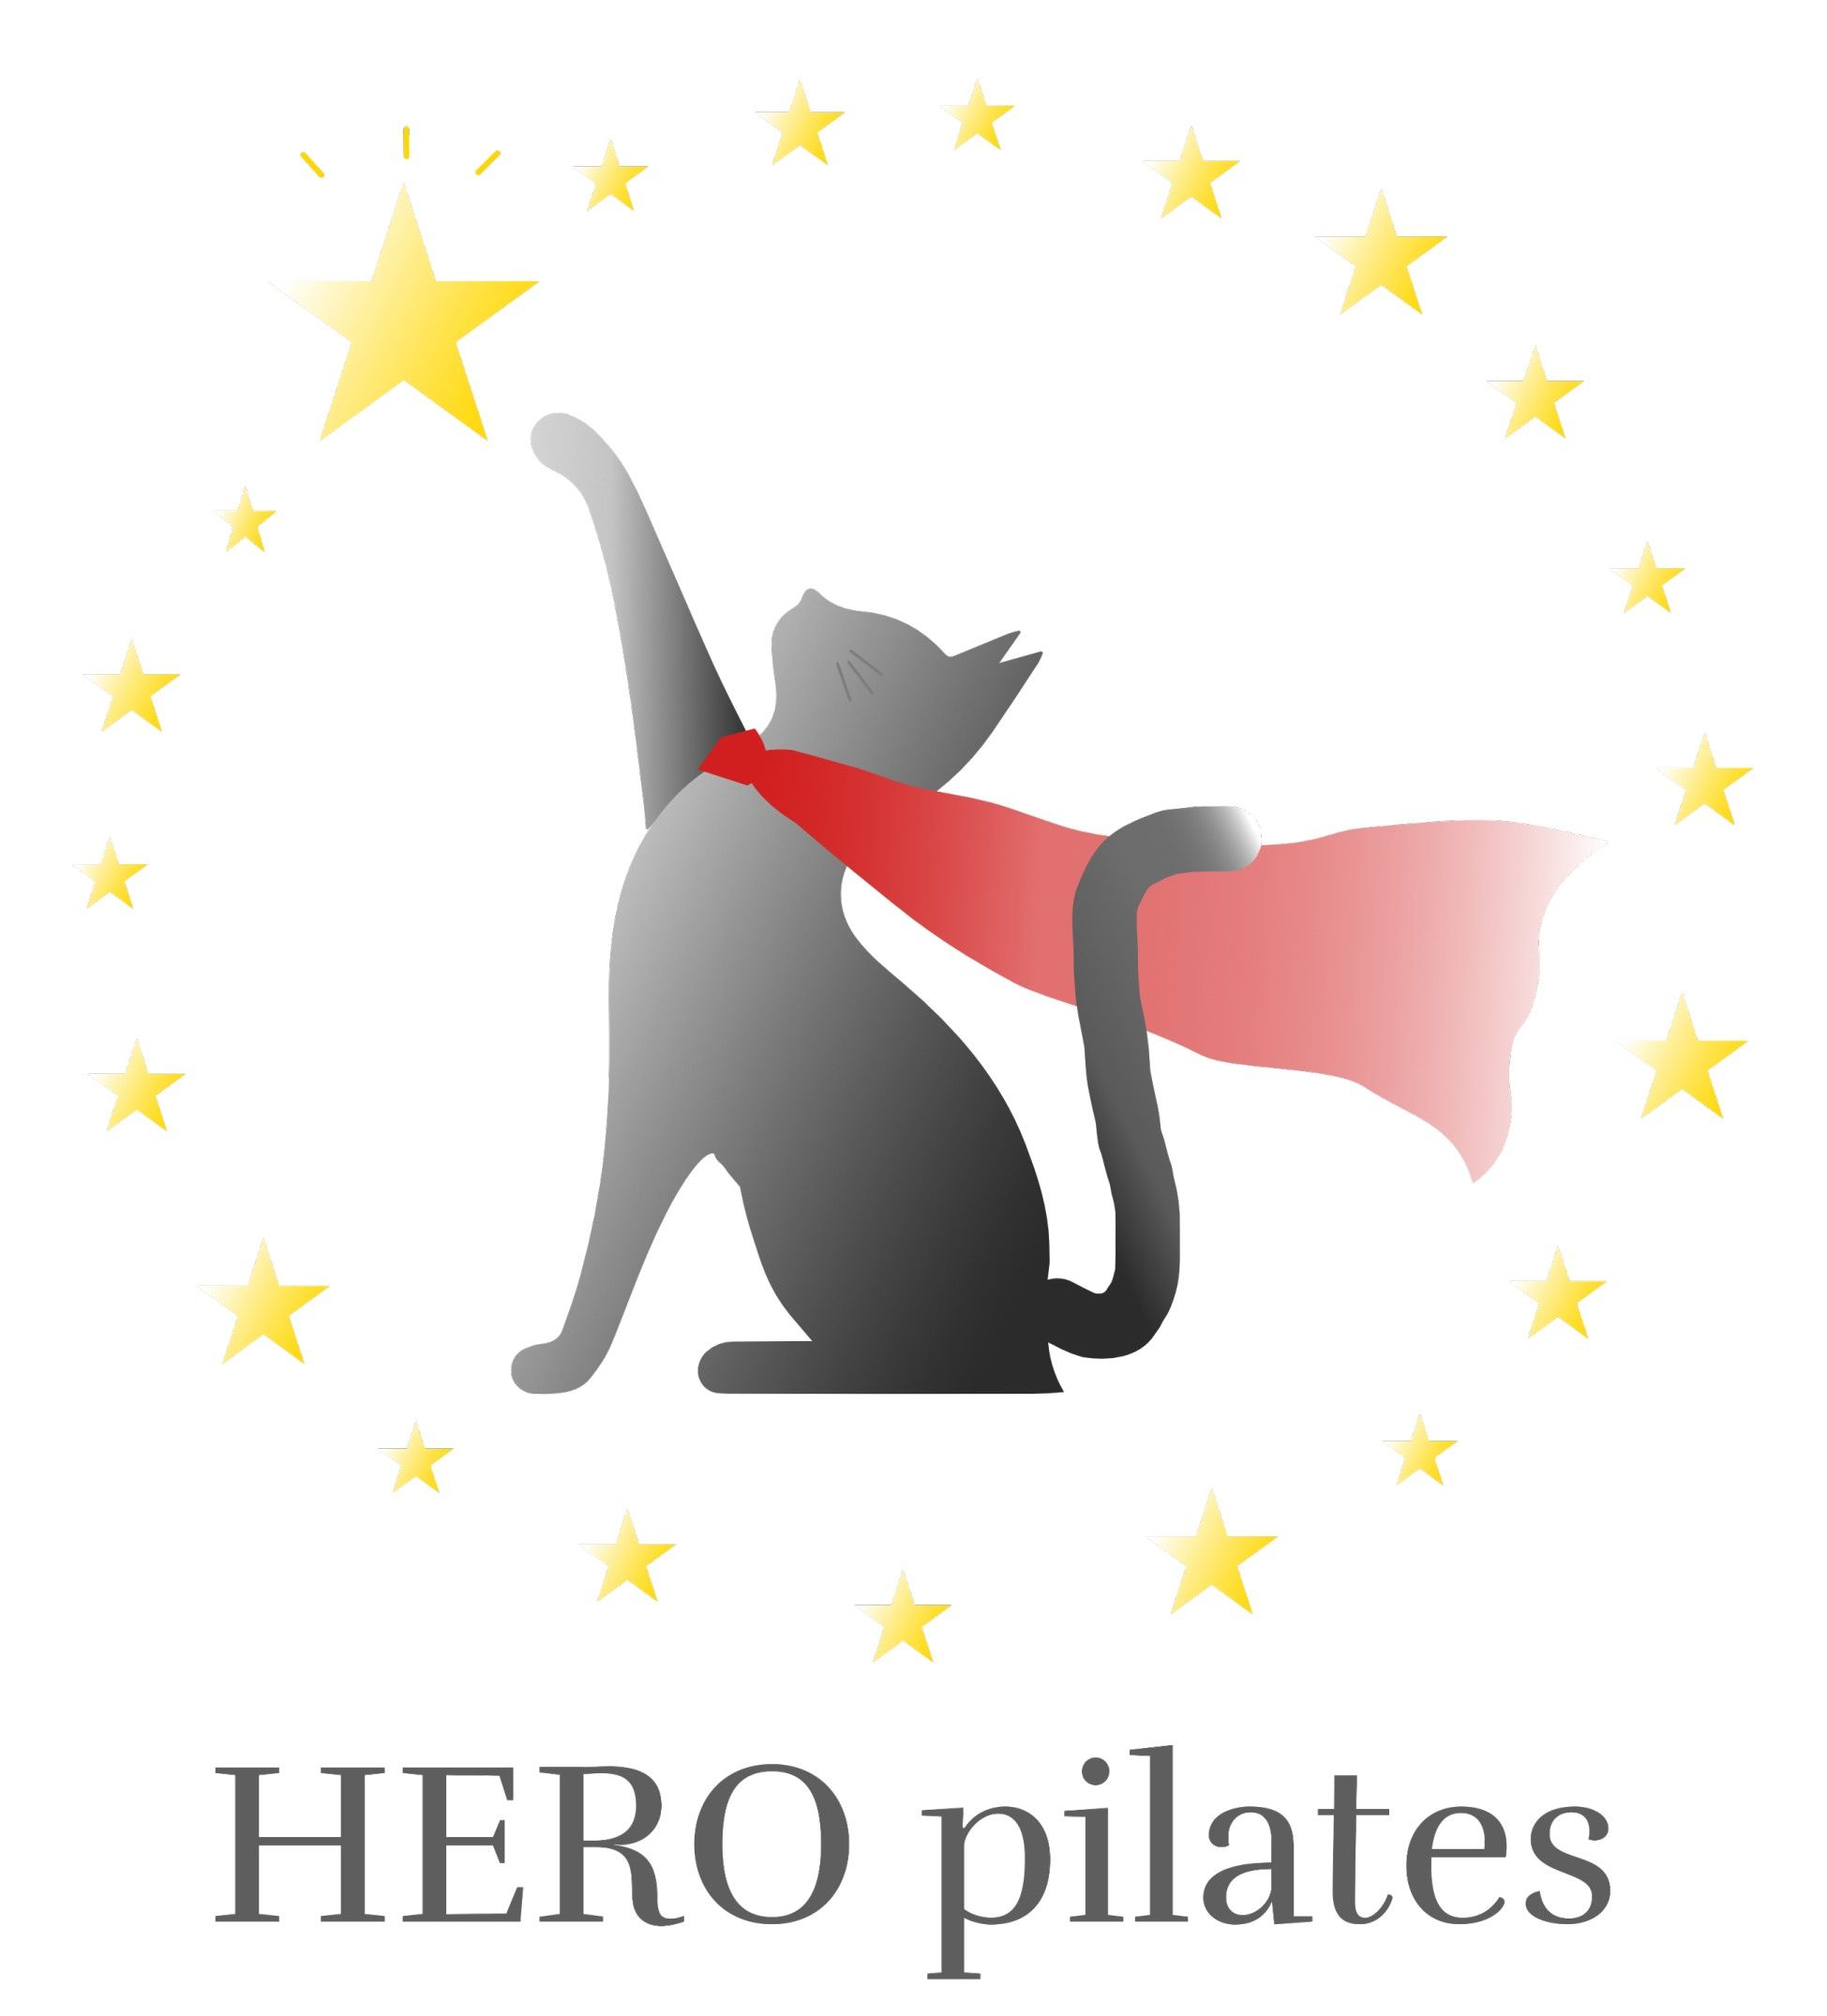 HERO pilates